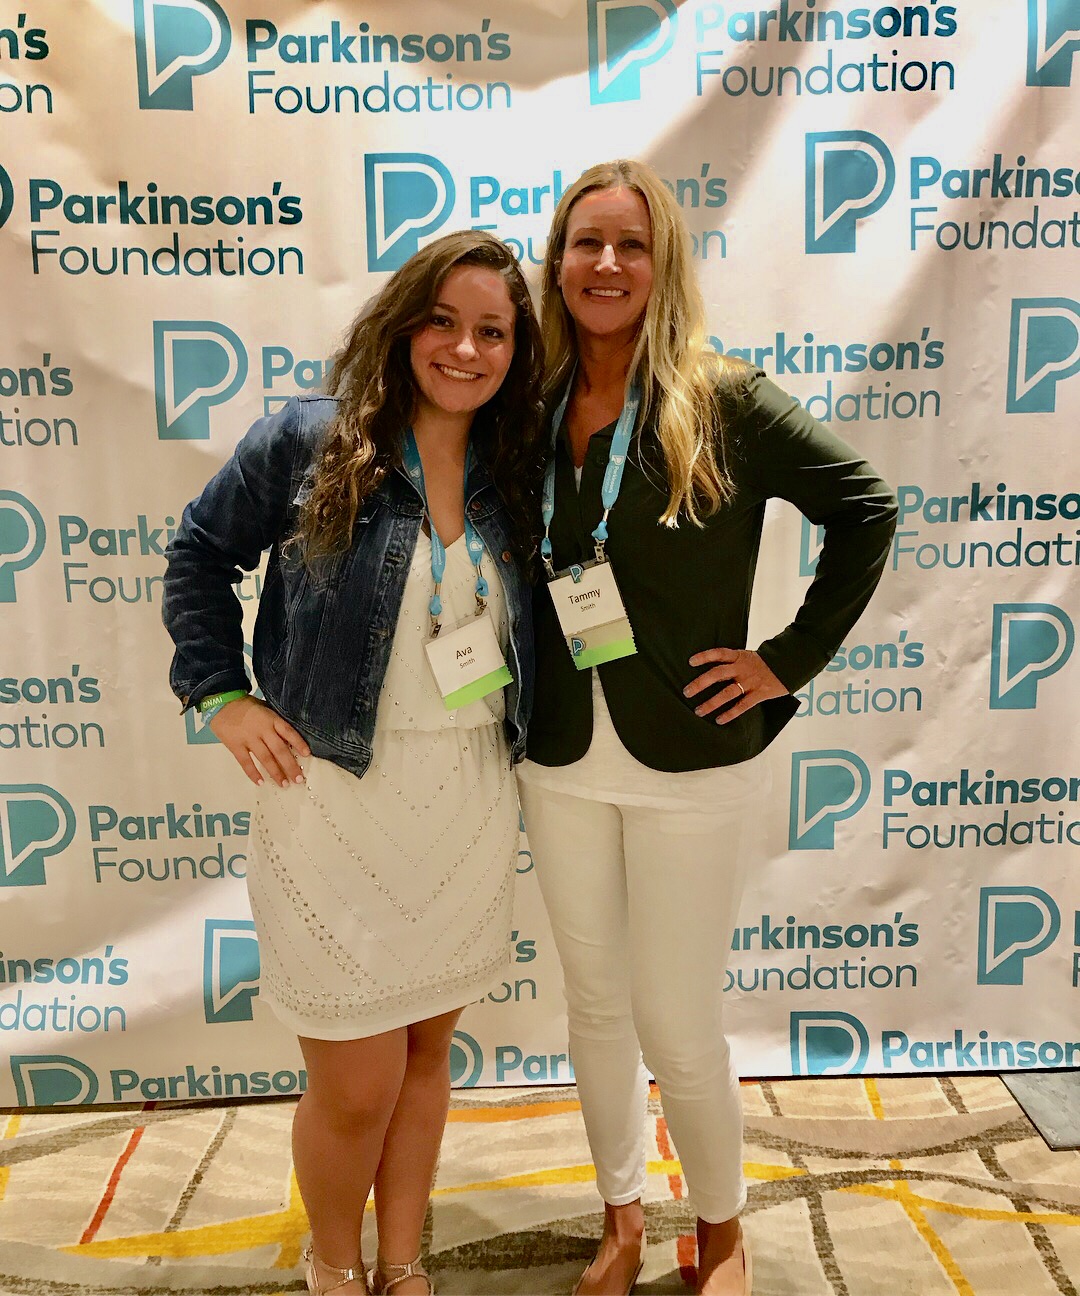 Ambassadors - Parkinson's Disease Fundraising